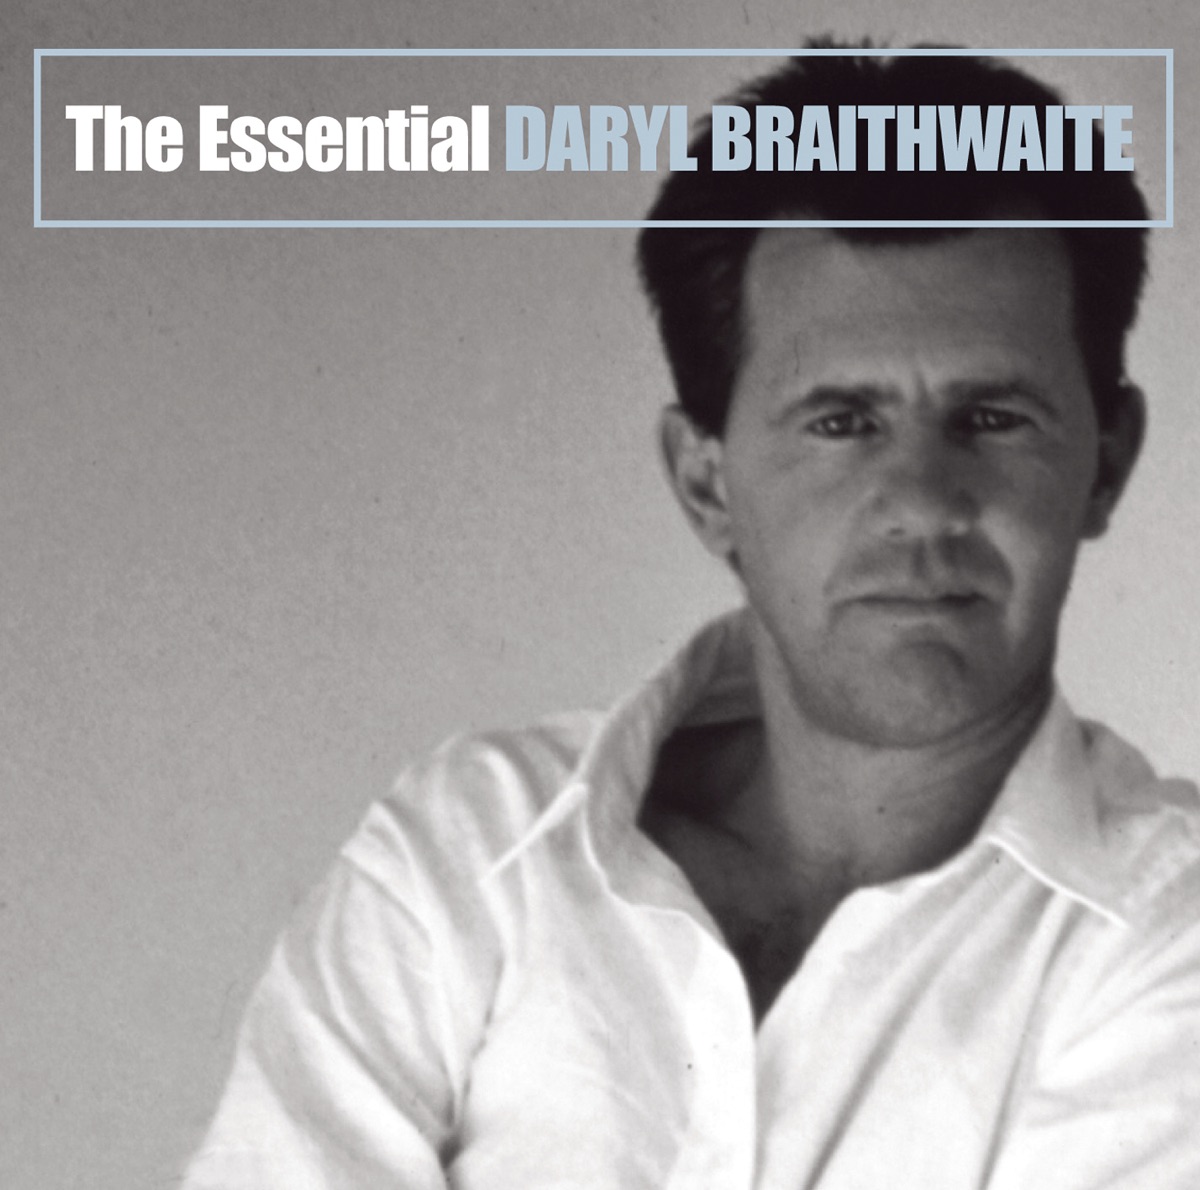 The Essential - Album by Daryl Braithwaite - Apple Music